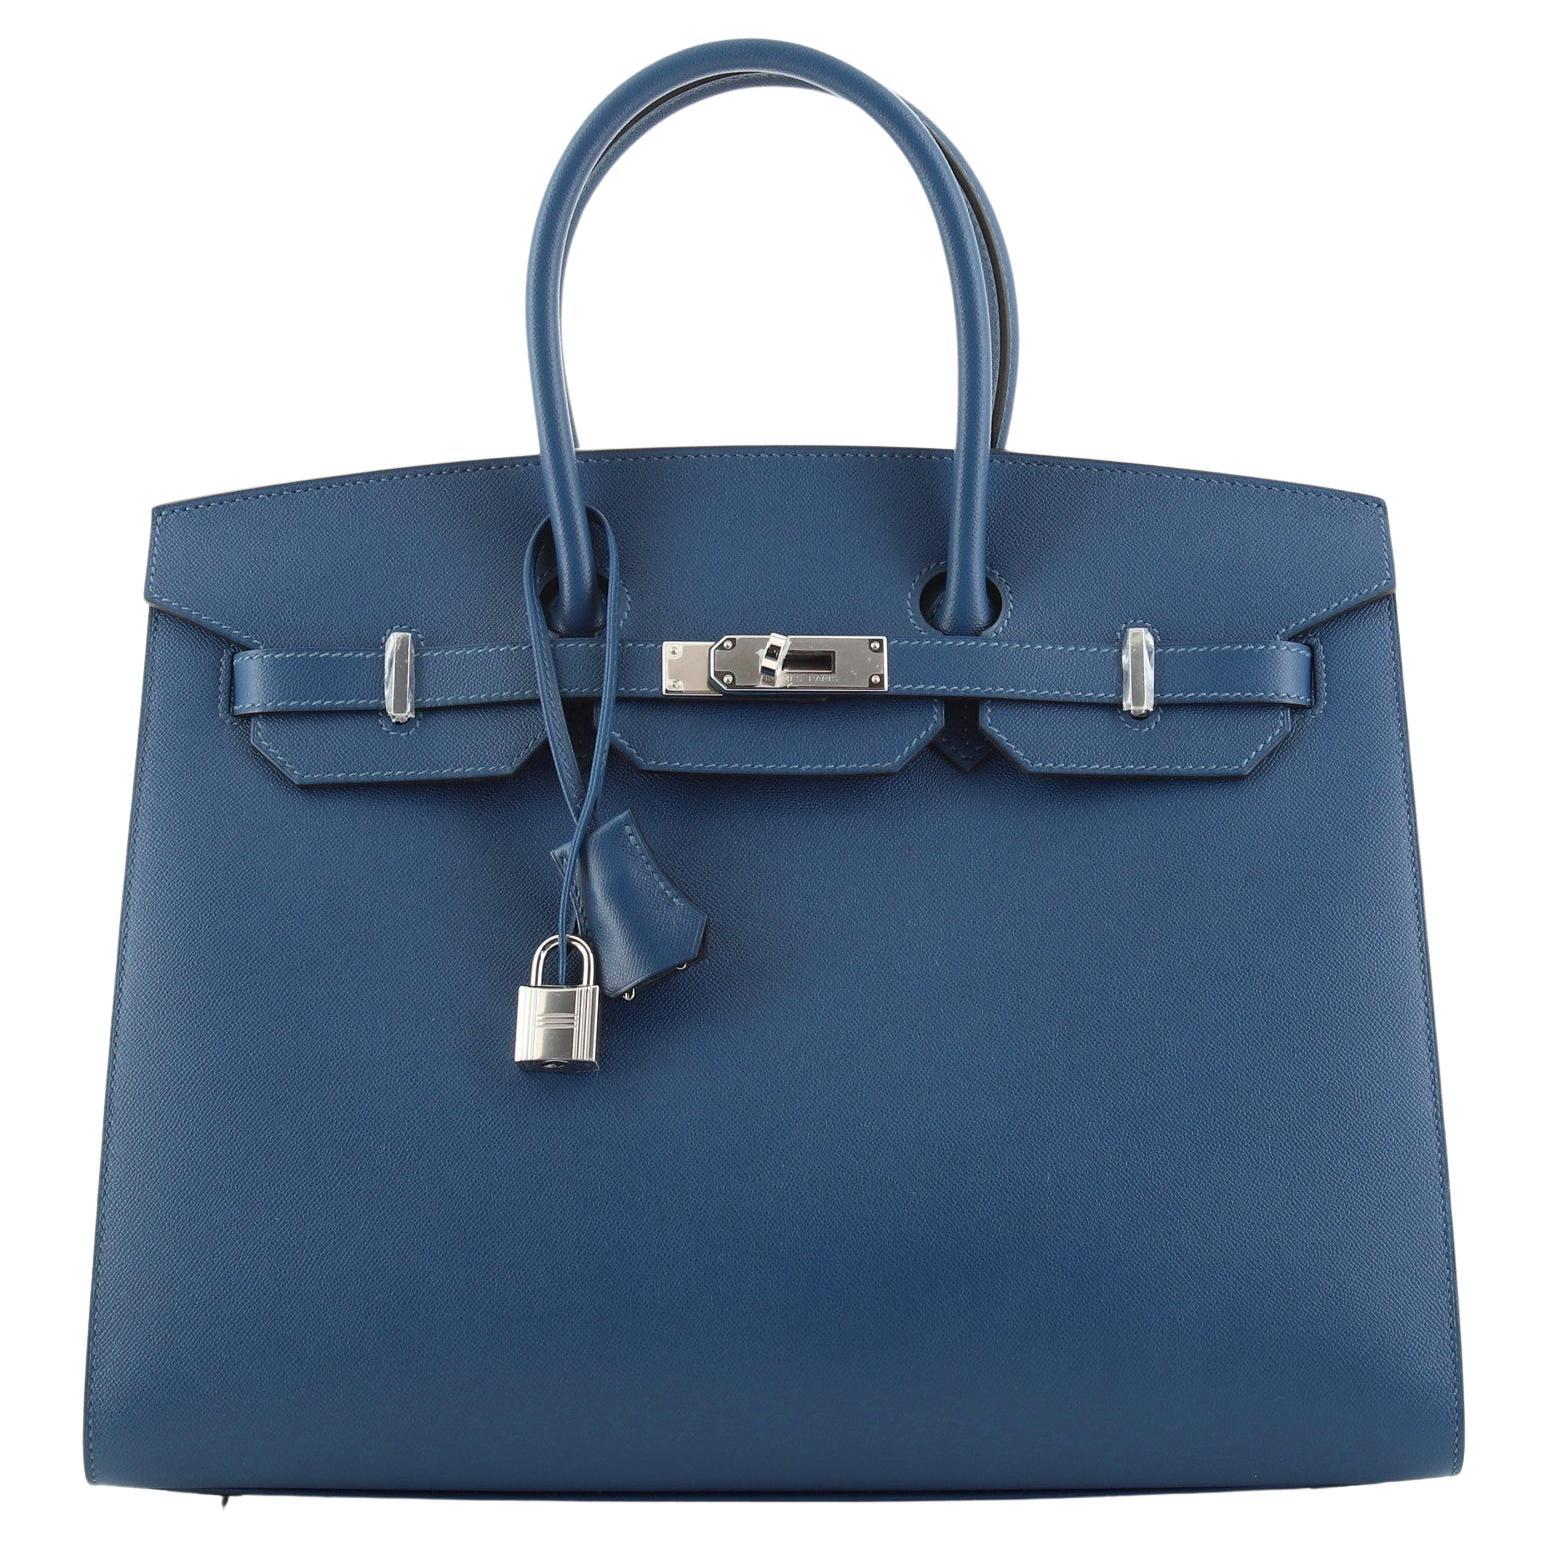 Hermes Birkin Sellier Bag Deep Blue Madame with Palladium Hardware 35